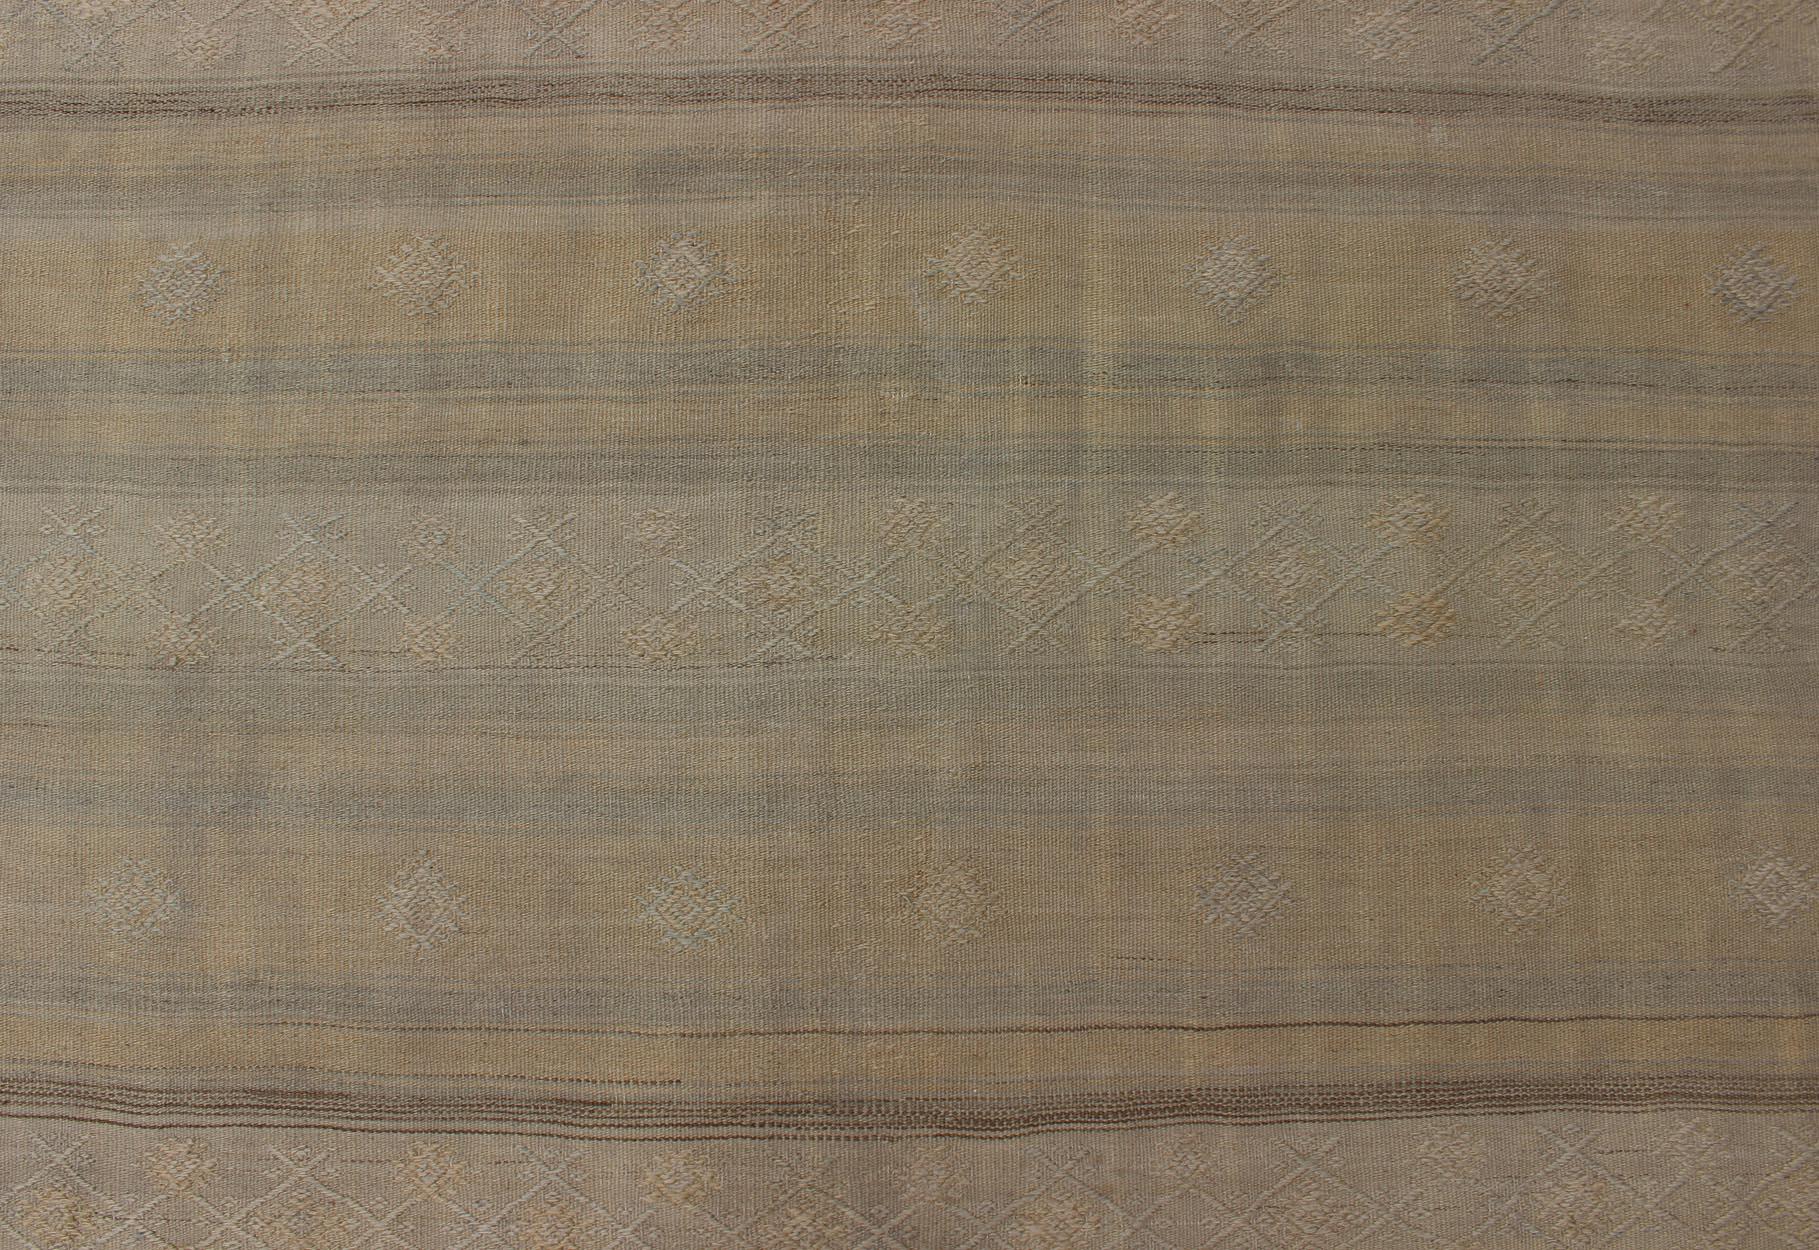 Wool Vintage Turkish Kilim Gallery Rug with Stripe Design and Tribal Motifs in Brown